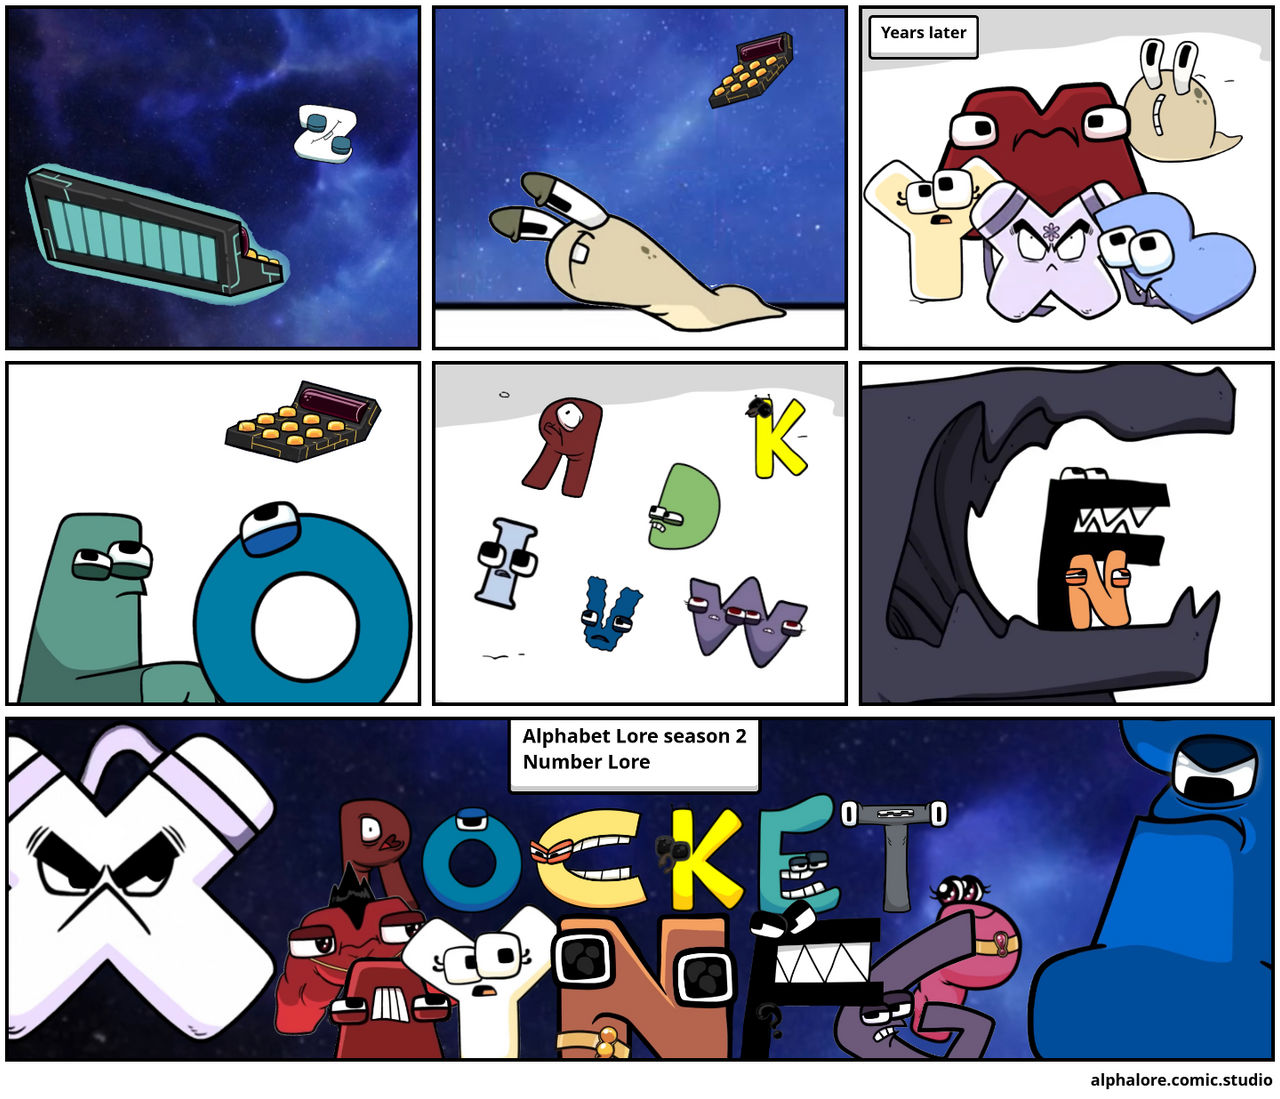 A part of the alphabet lore movie - Comic Studio